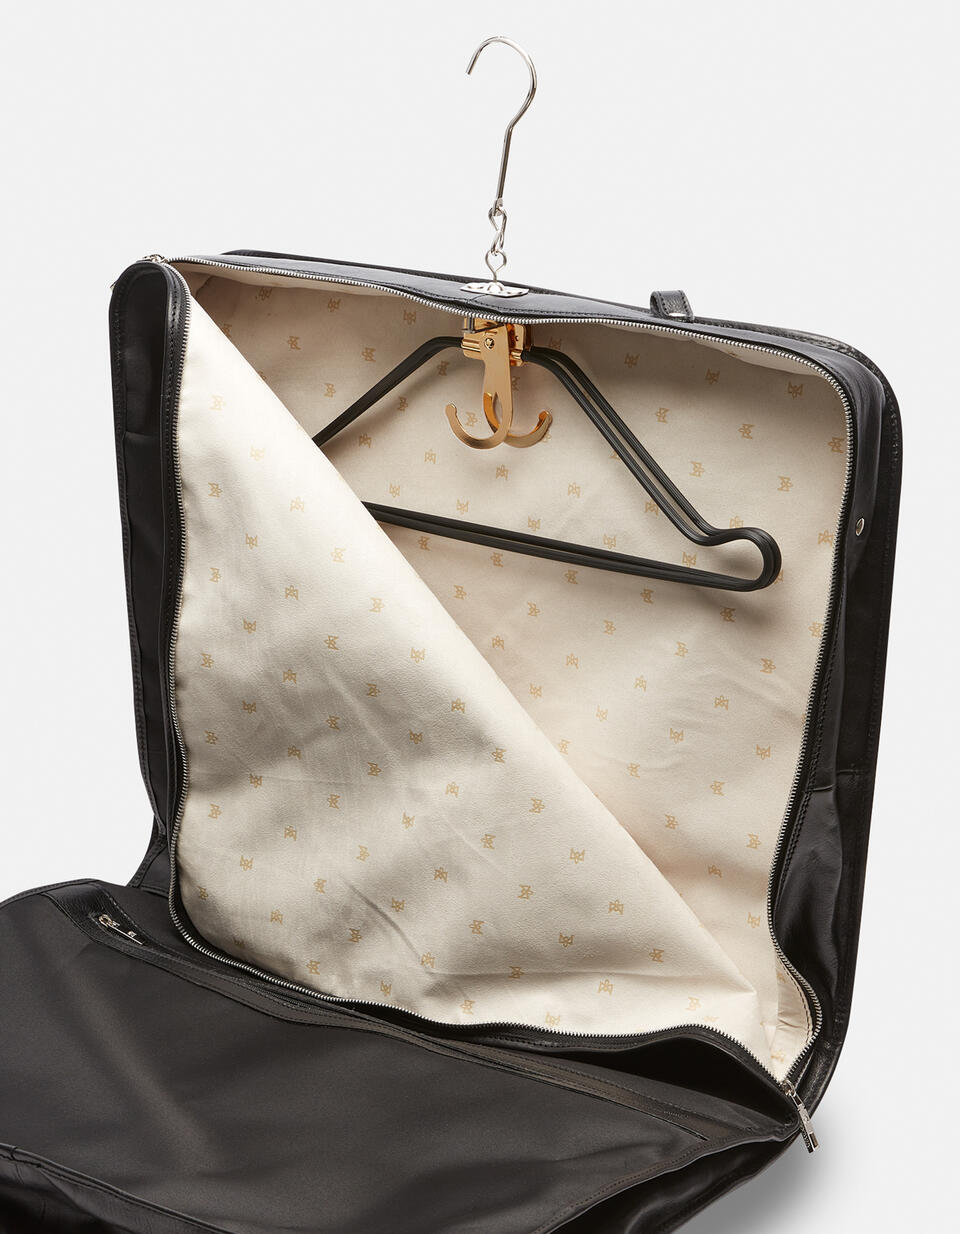 Oxford travel garment bag in vegetable tanned leather - Luggage | TRAVEL BAGS NERO - Luggage | TRAVEL BAGSCuoieria Fiorentina